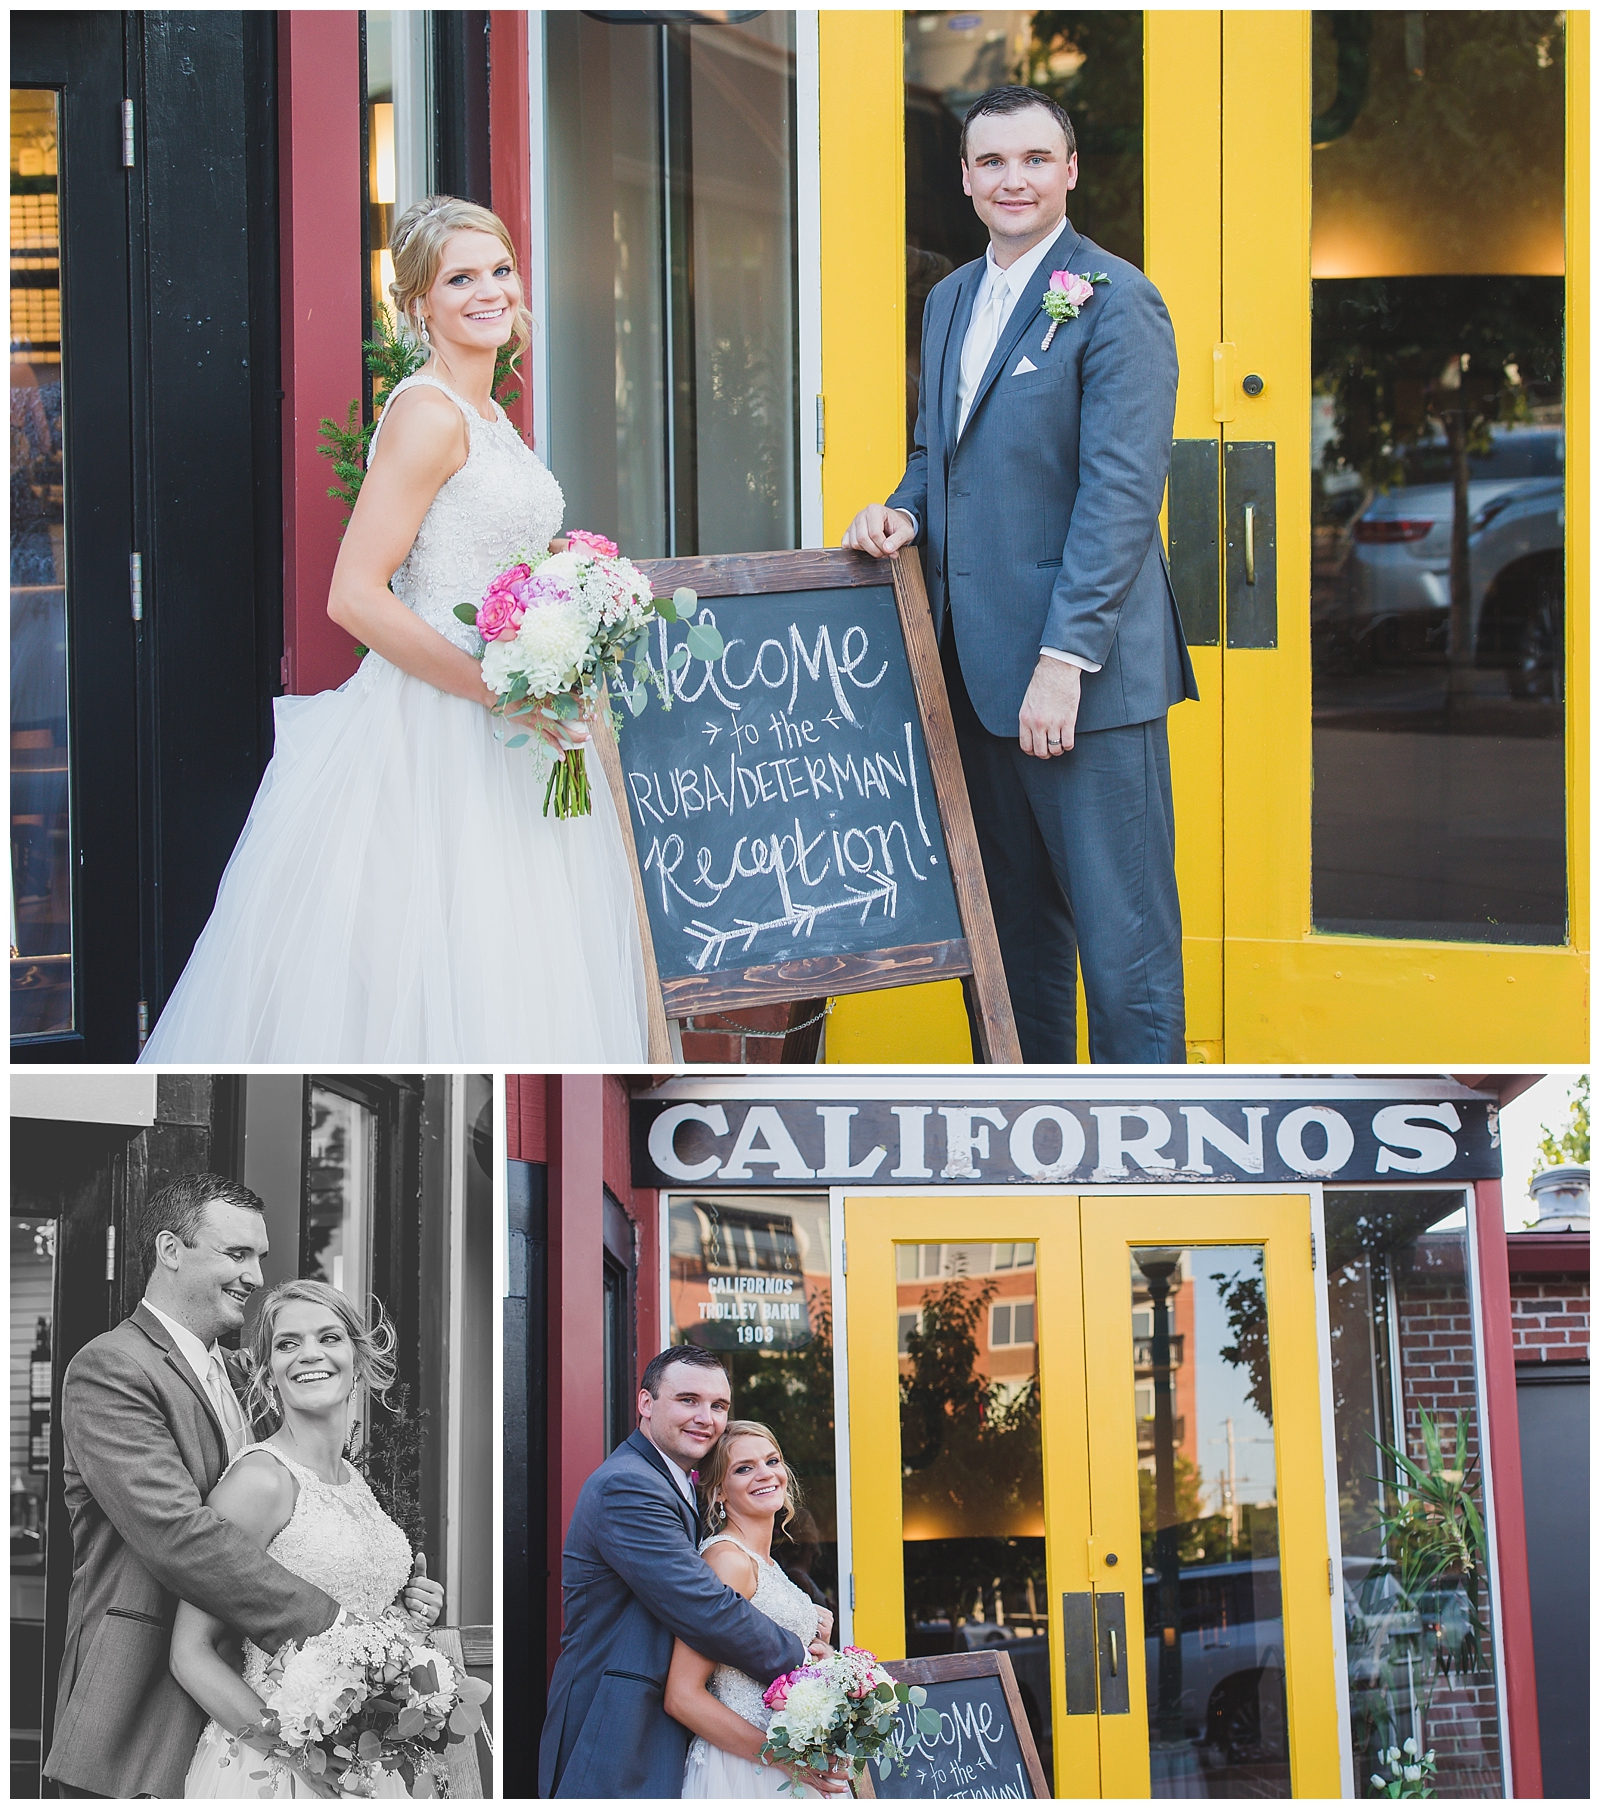 Wedding photography at Californos in Westport by Kansas City wedding photographers Wisdom-Watson Weddings.